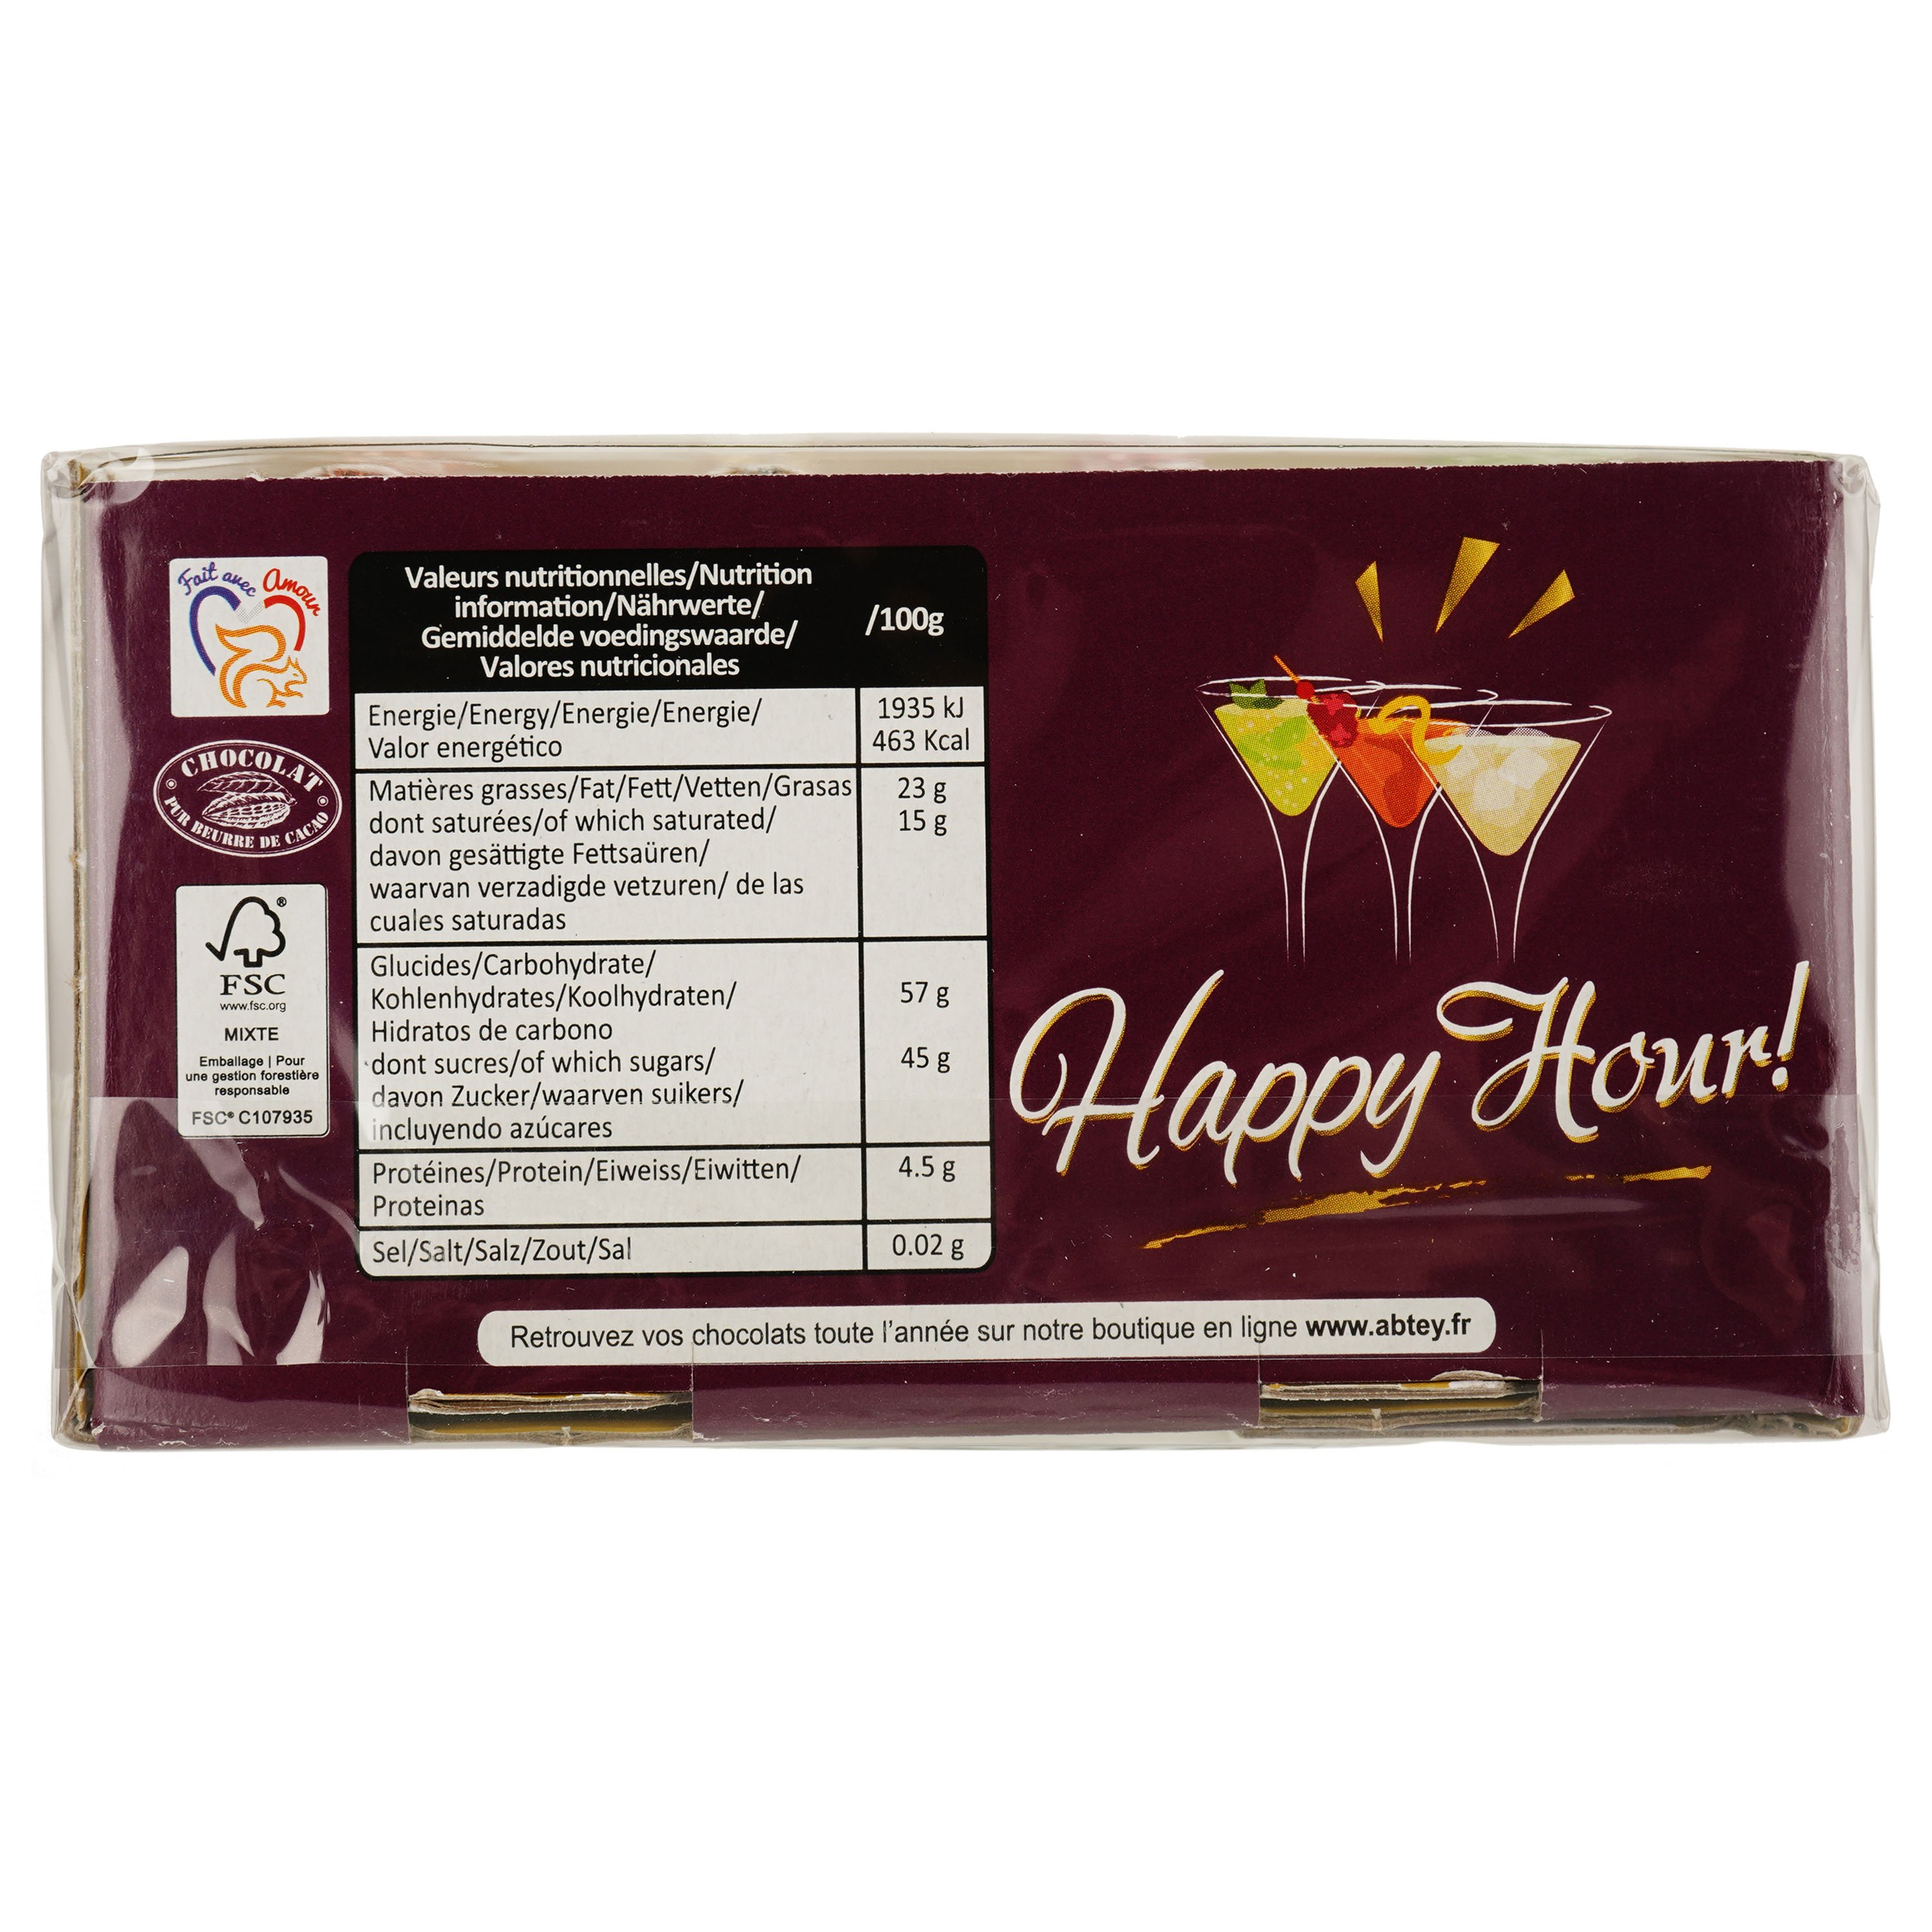 Шоколадні цукерки з алкоголем Abtey Happy Hour, 155 г (693844) - фото 2